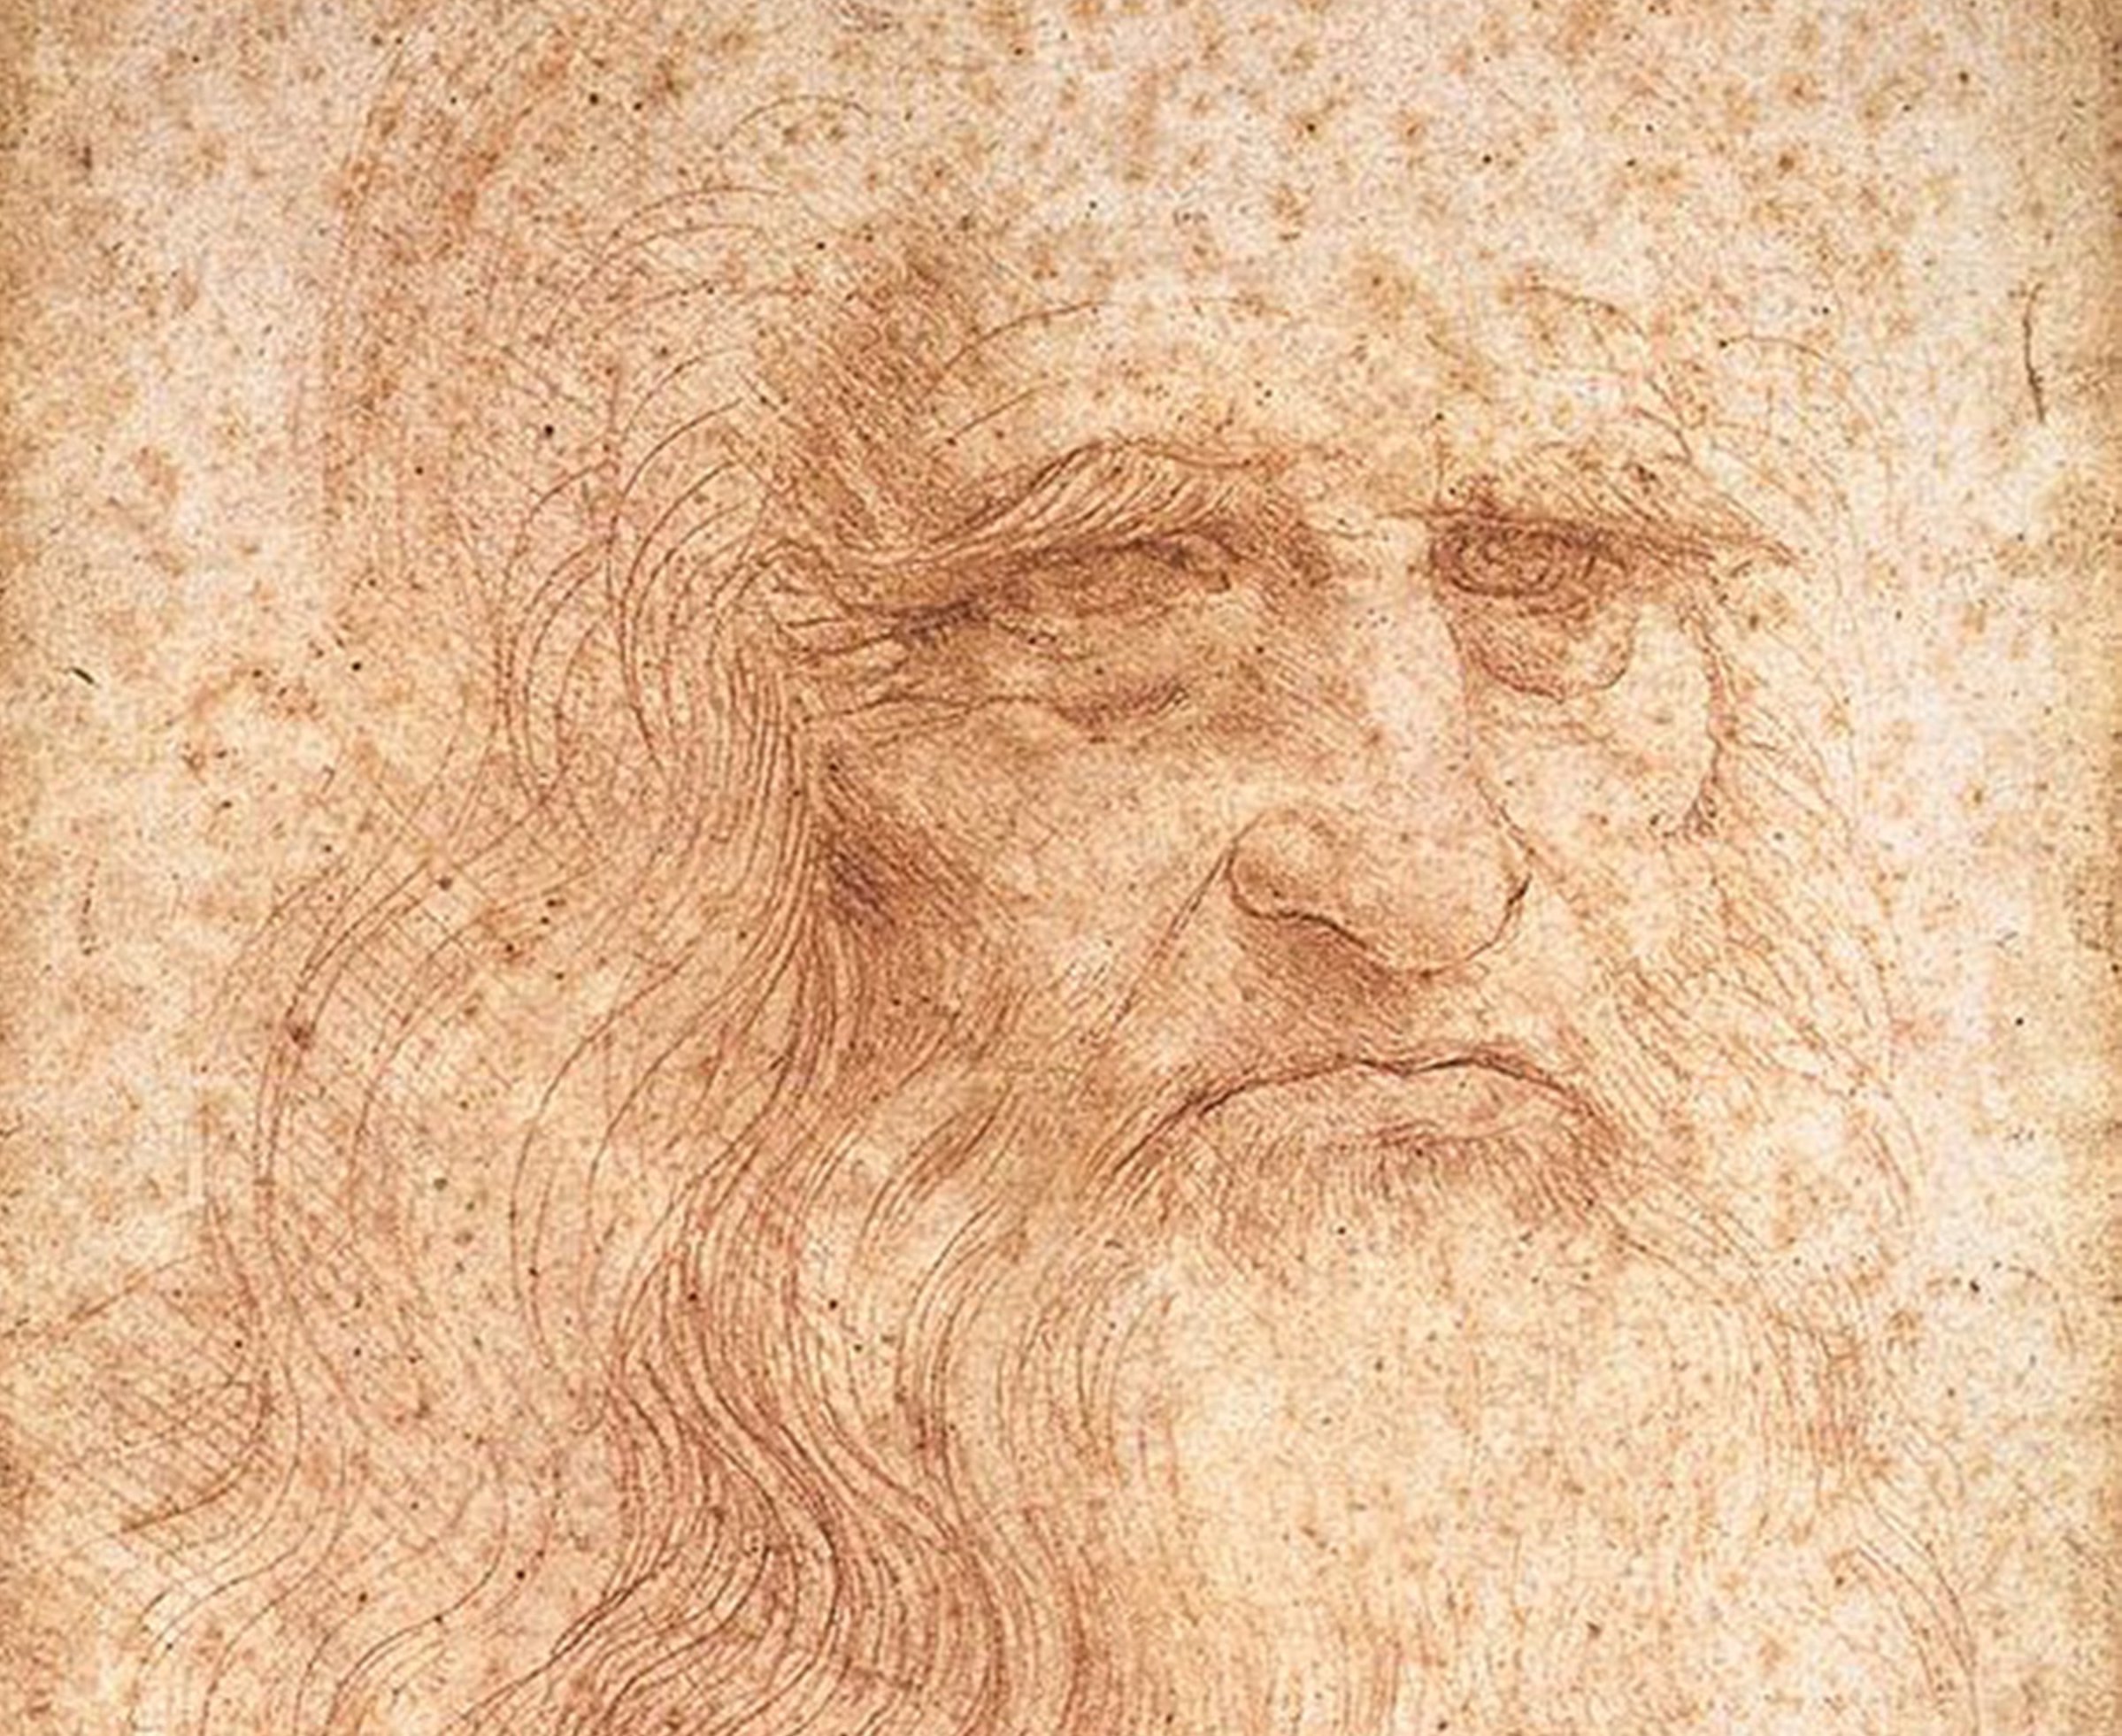 Leonardo da Vinci, autoritratto